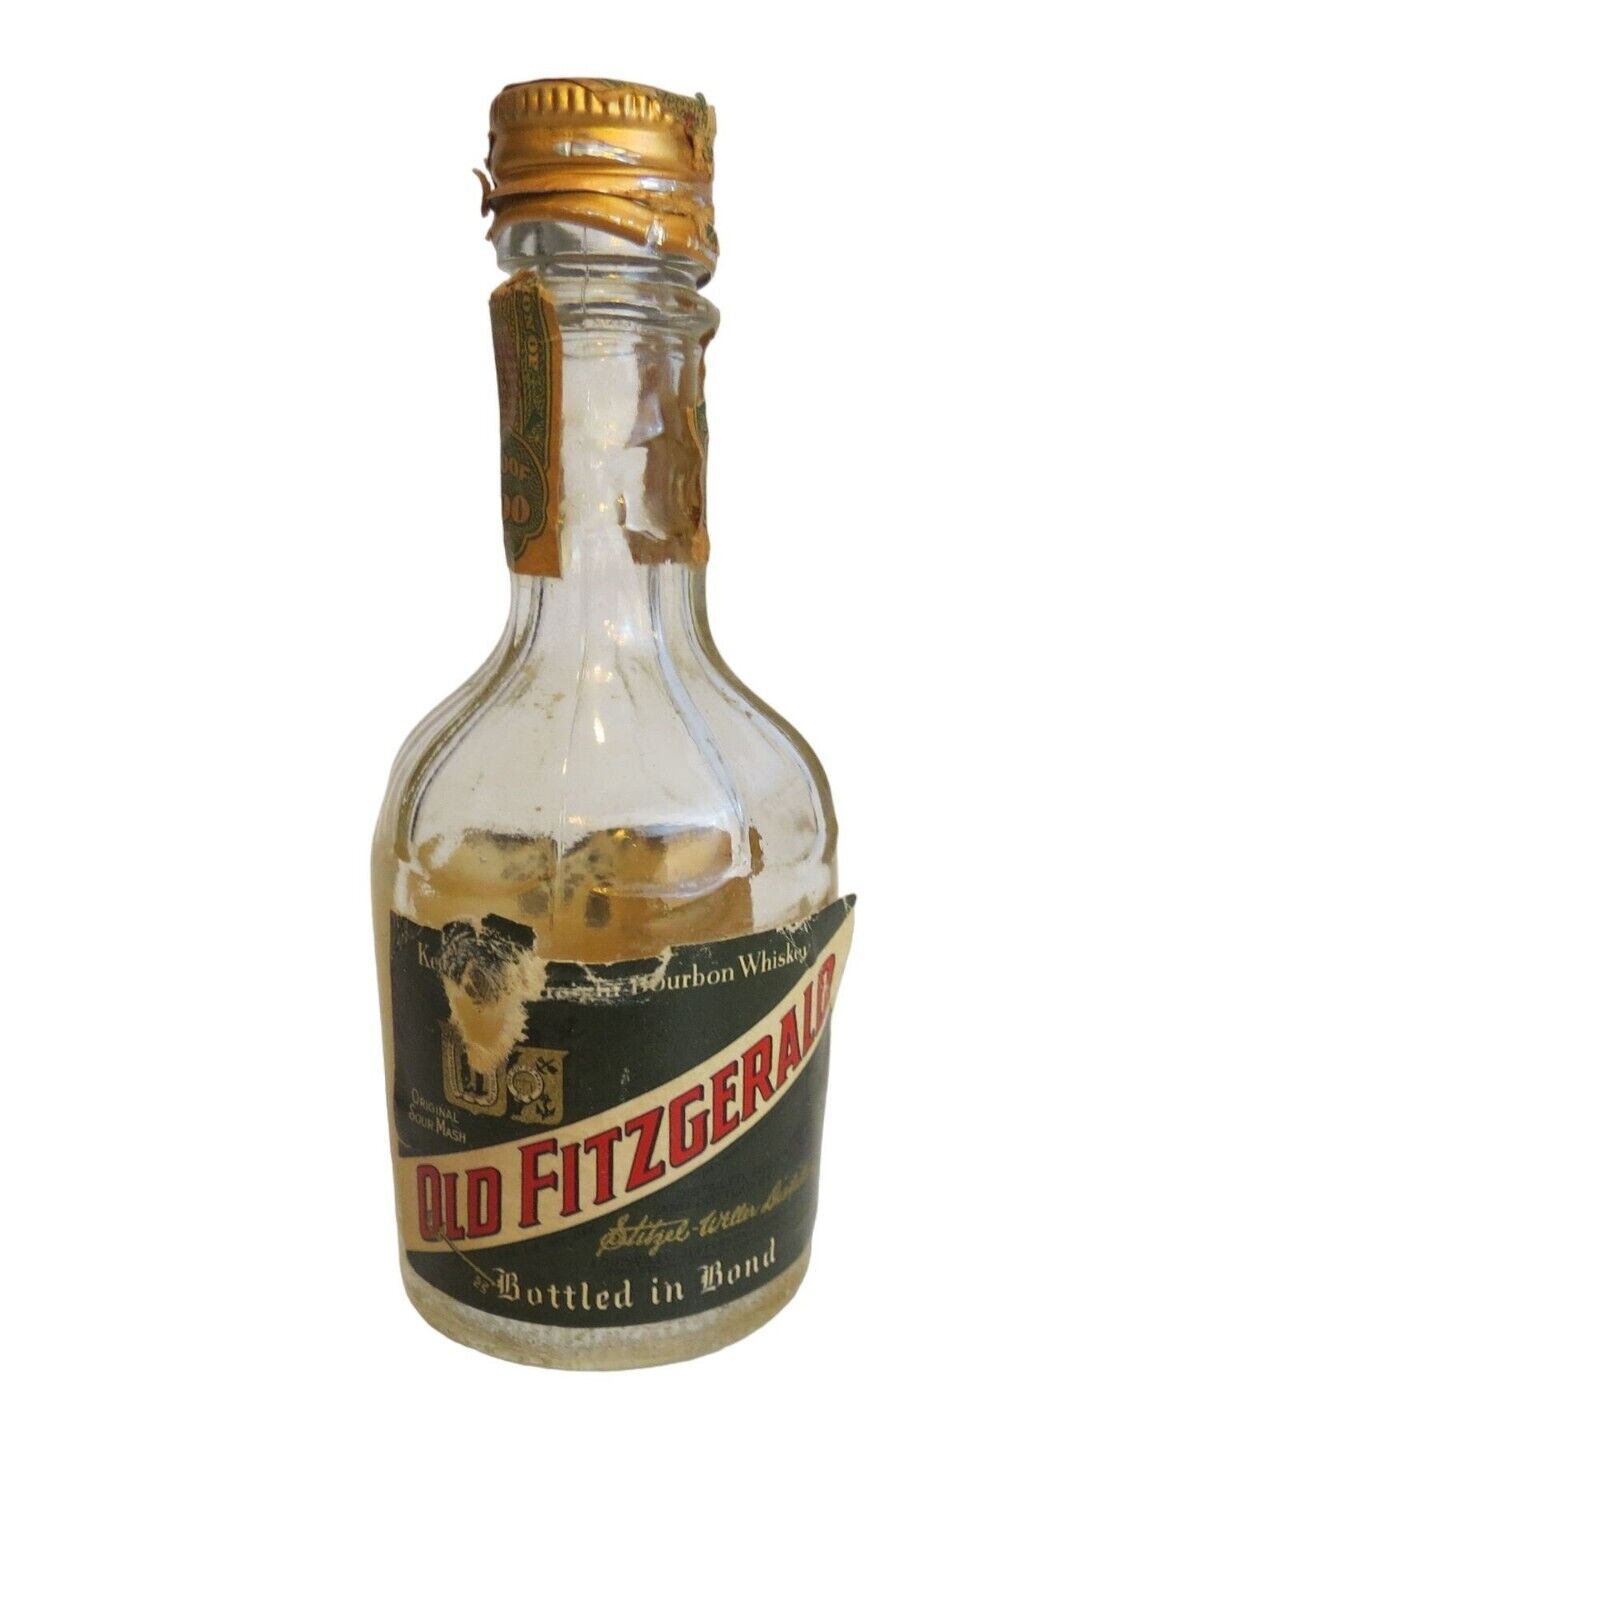 Vintage Old Fitzgerald Miniature Whiskey Bottle Empty Liquor Advertising